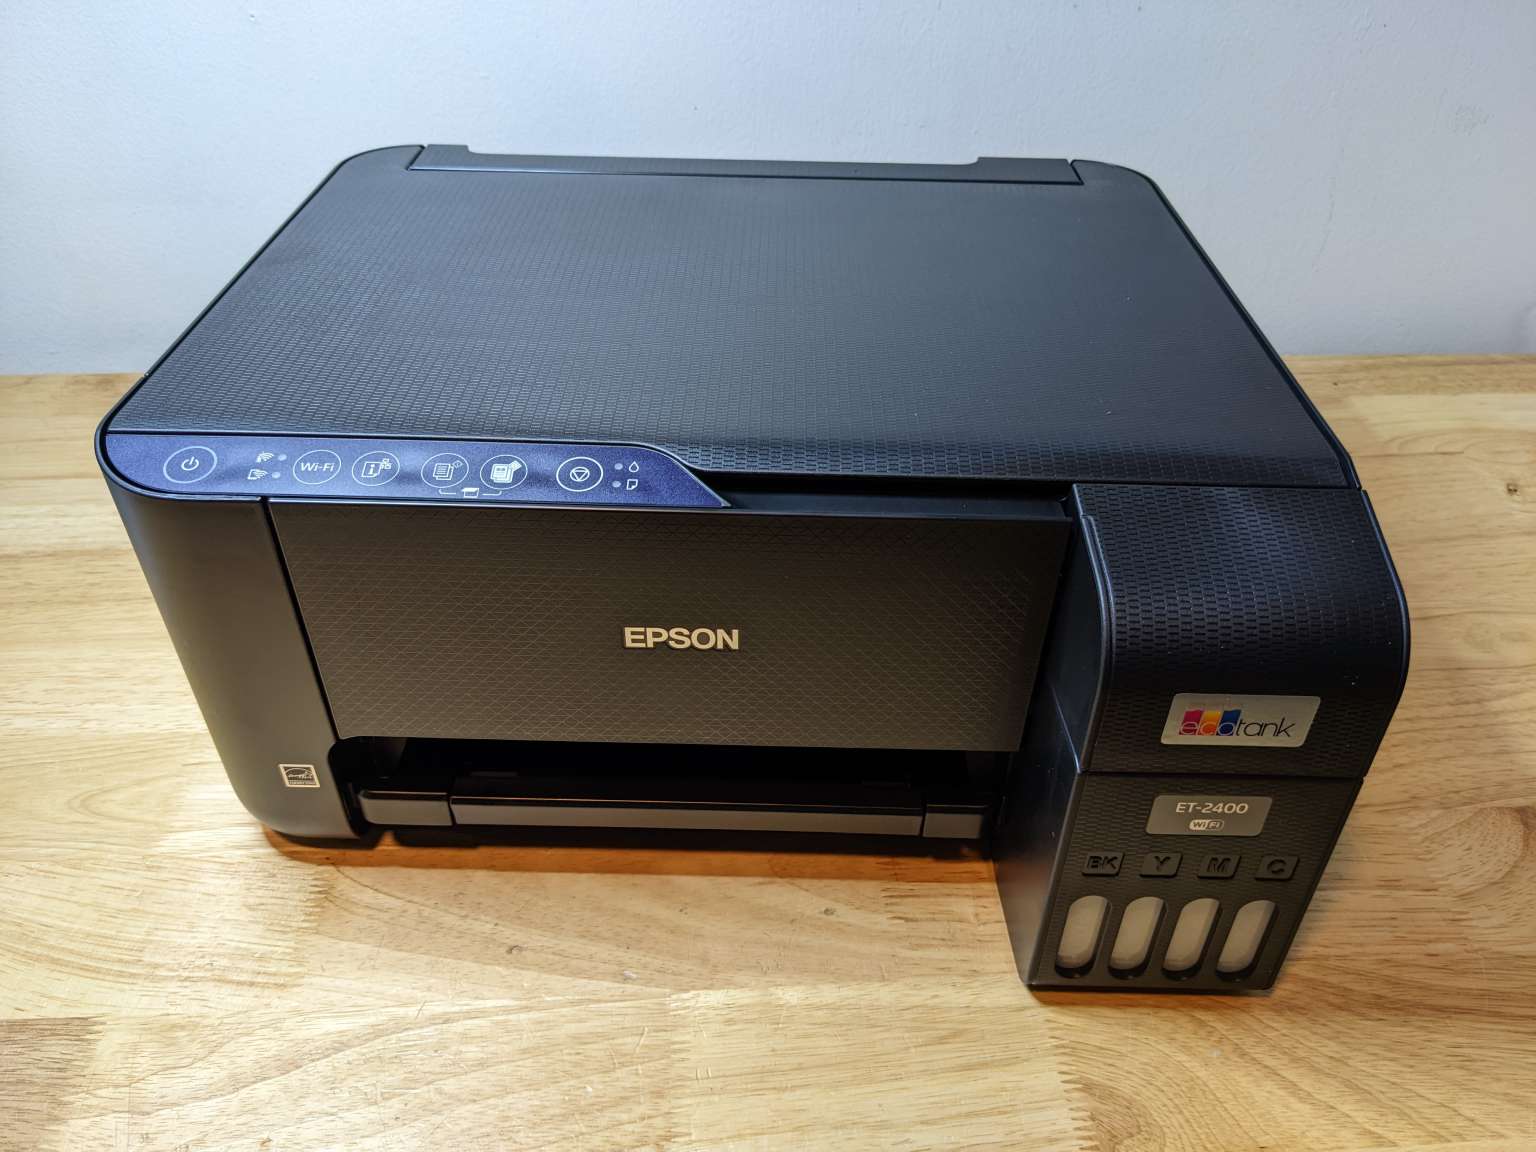 Epson Ecotank Et 2400 Wireless Color Supertank Printer Review Never Buy Ink Cartridges Again 2743